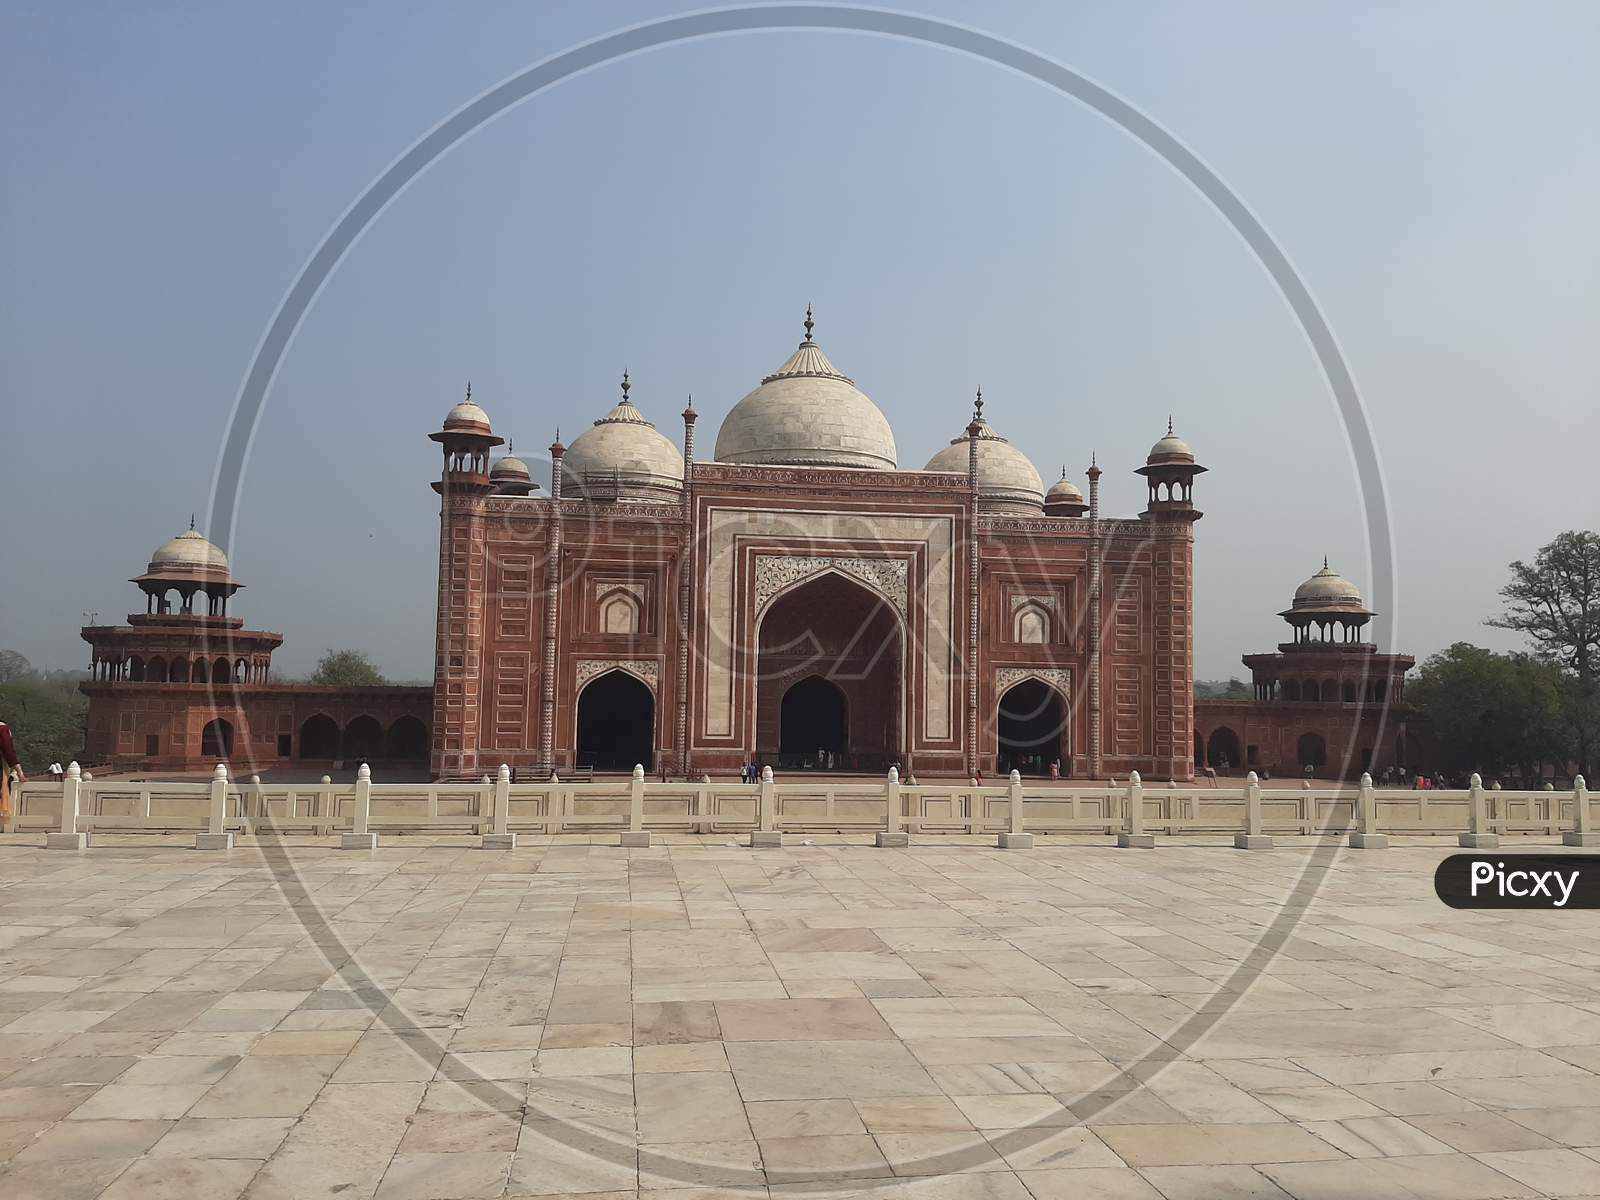 Mosque of the Taj Mahal